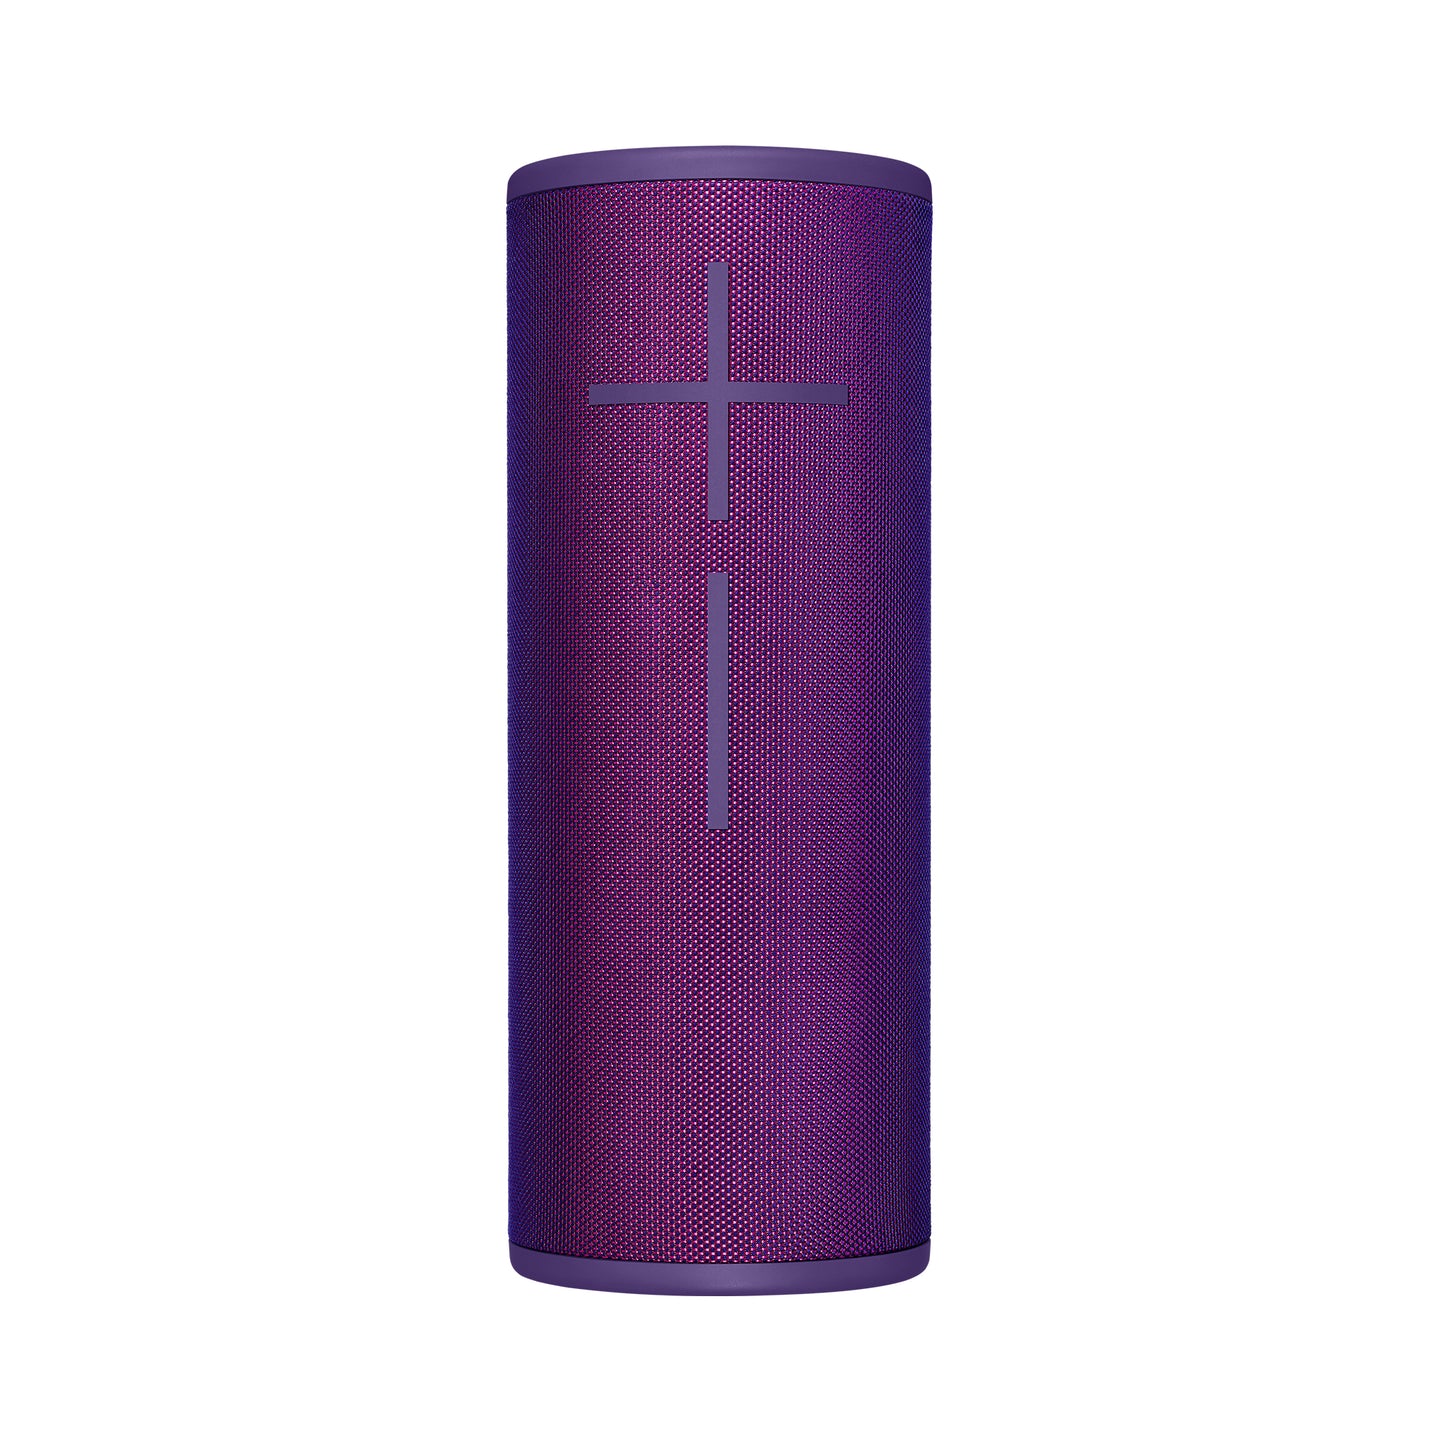 UE Megaboom 3 Wireless Portable Speaker - Ultraviolet Purple